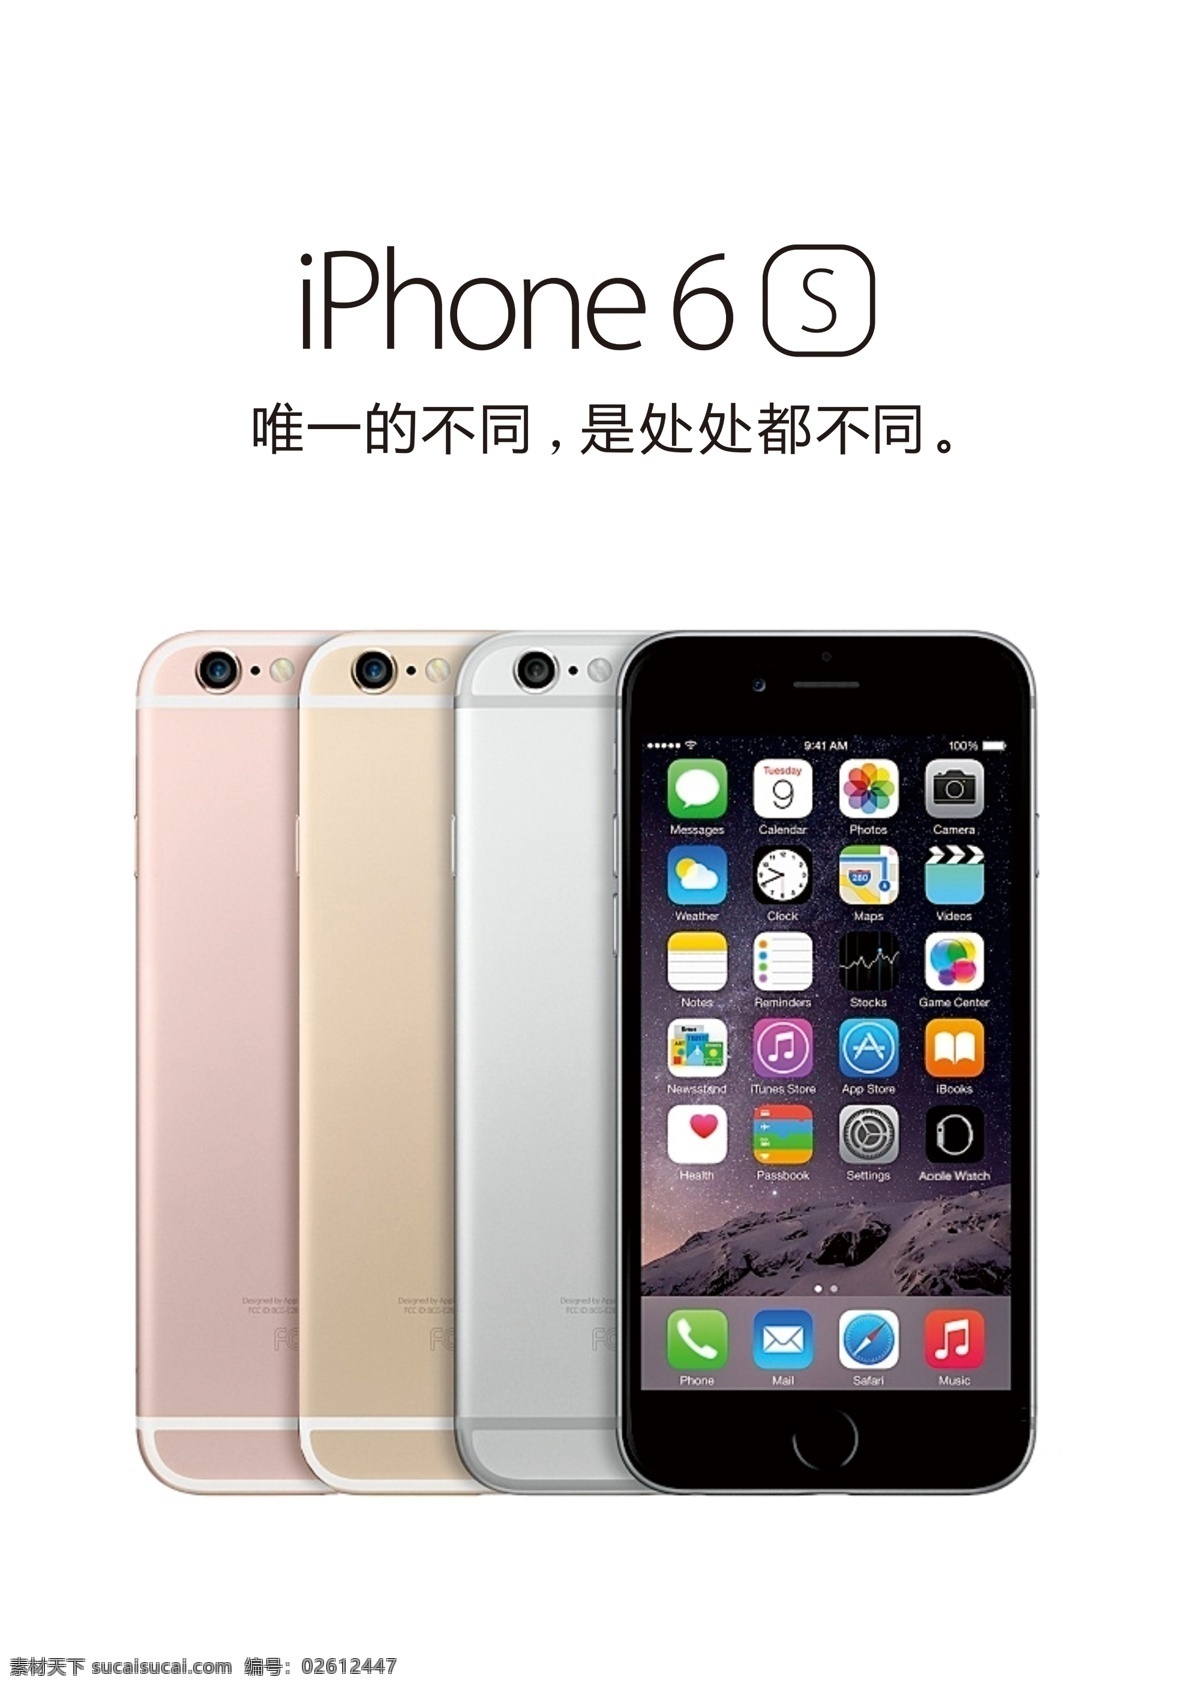 iphone6s 广告 苹果 苹果手机 活动 海报 iphone 白色